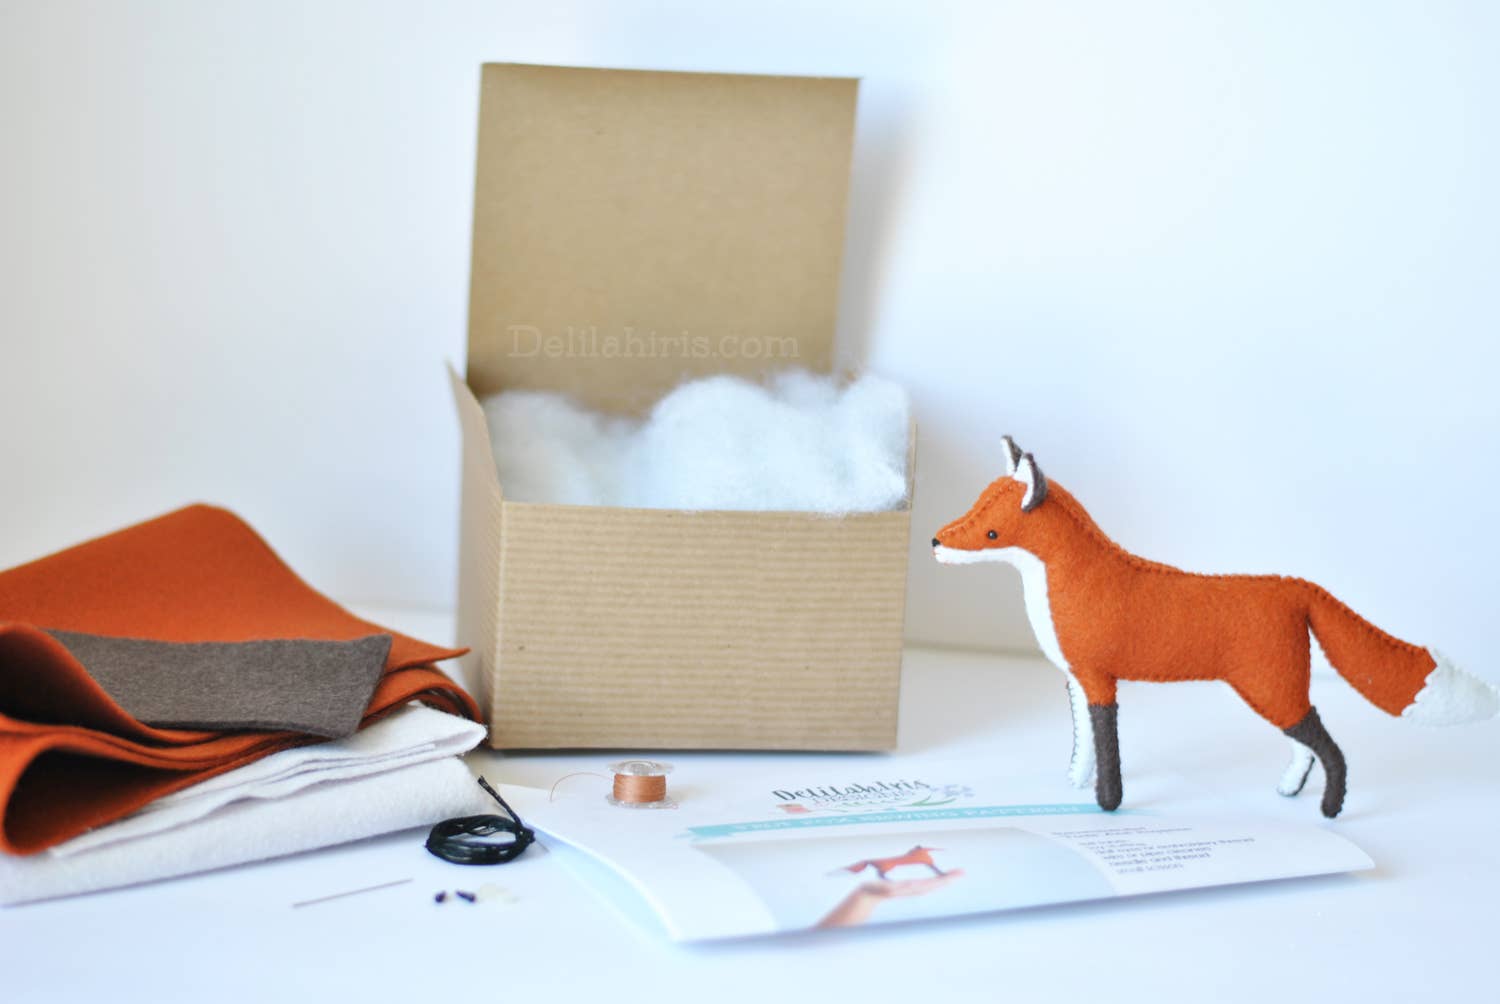 Delilah Iris Designs - Felt Fox Craft Kit